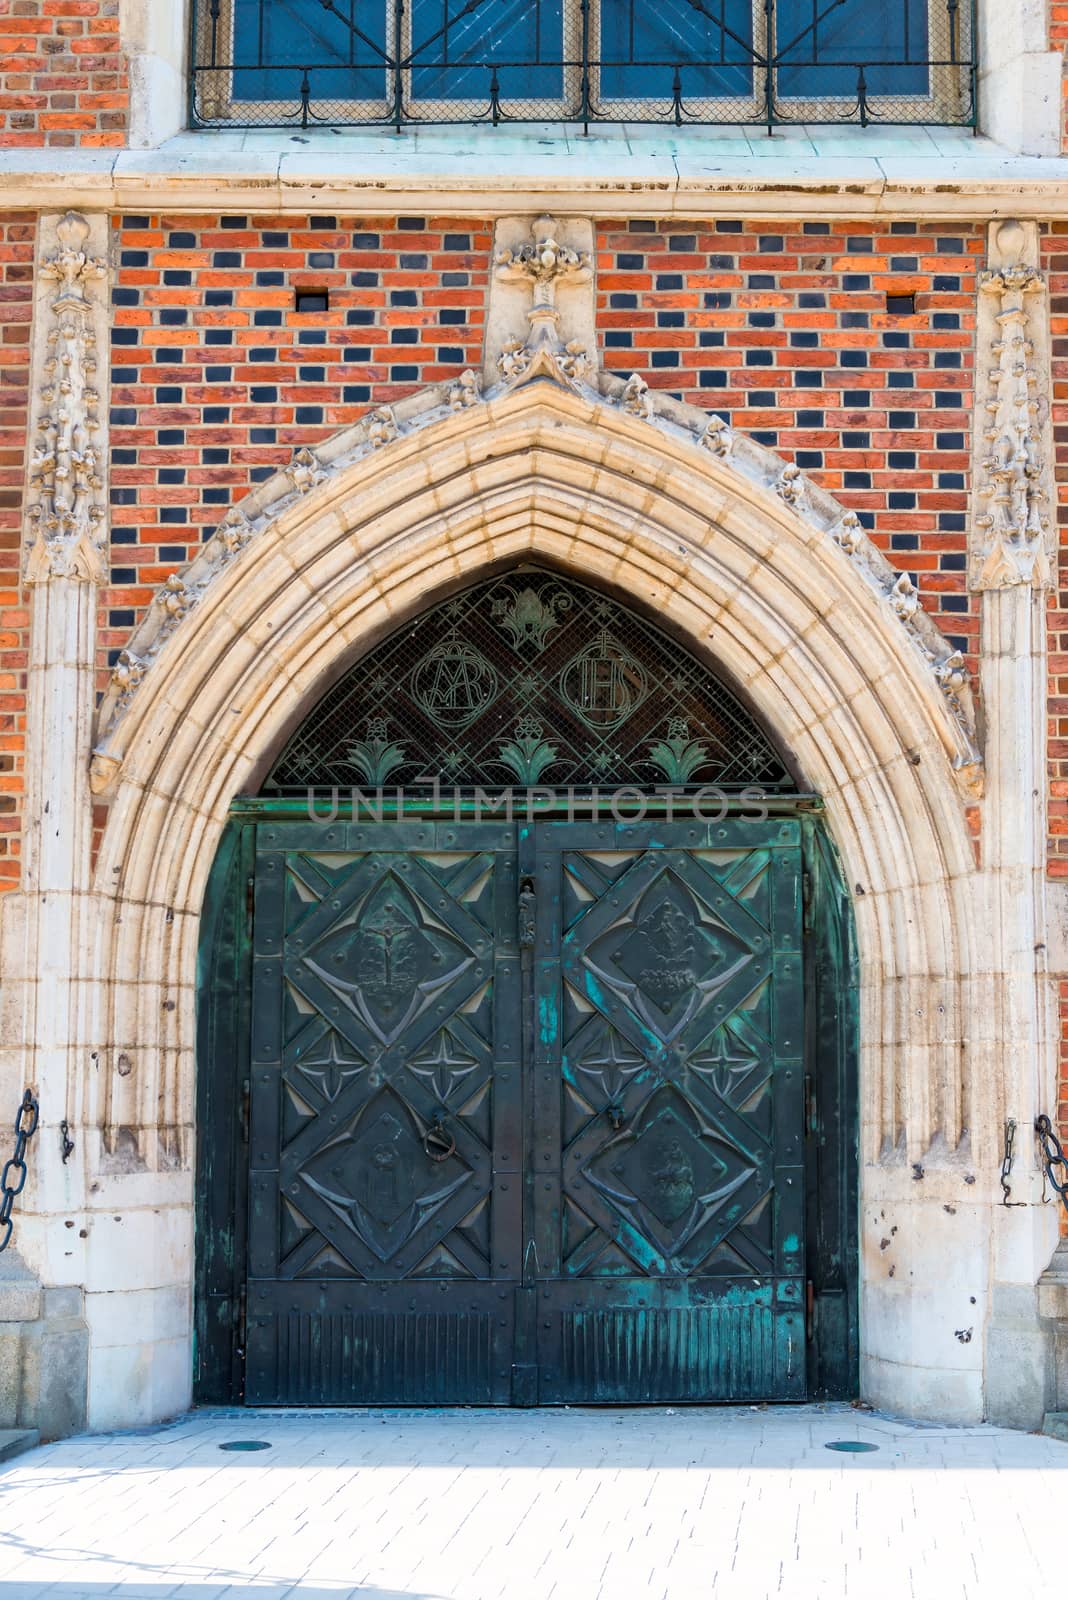 massive metal gate entrance to the brick Catholic church